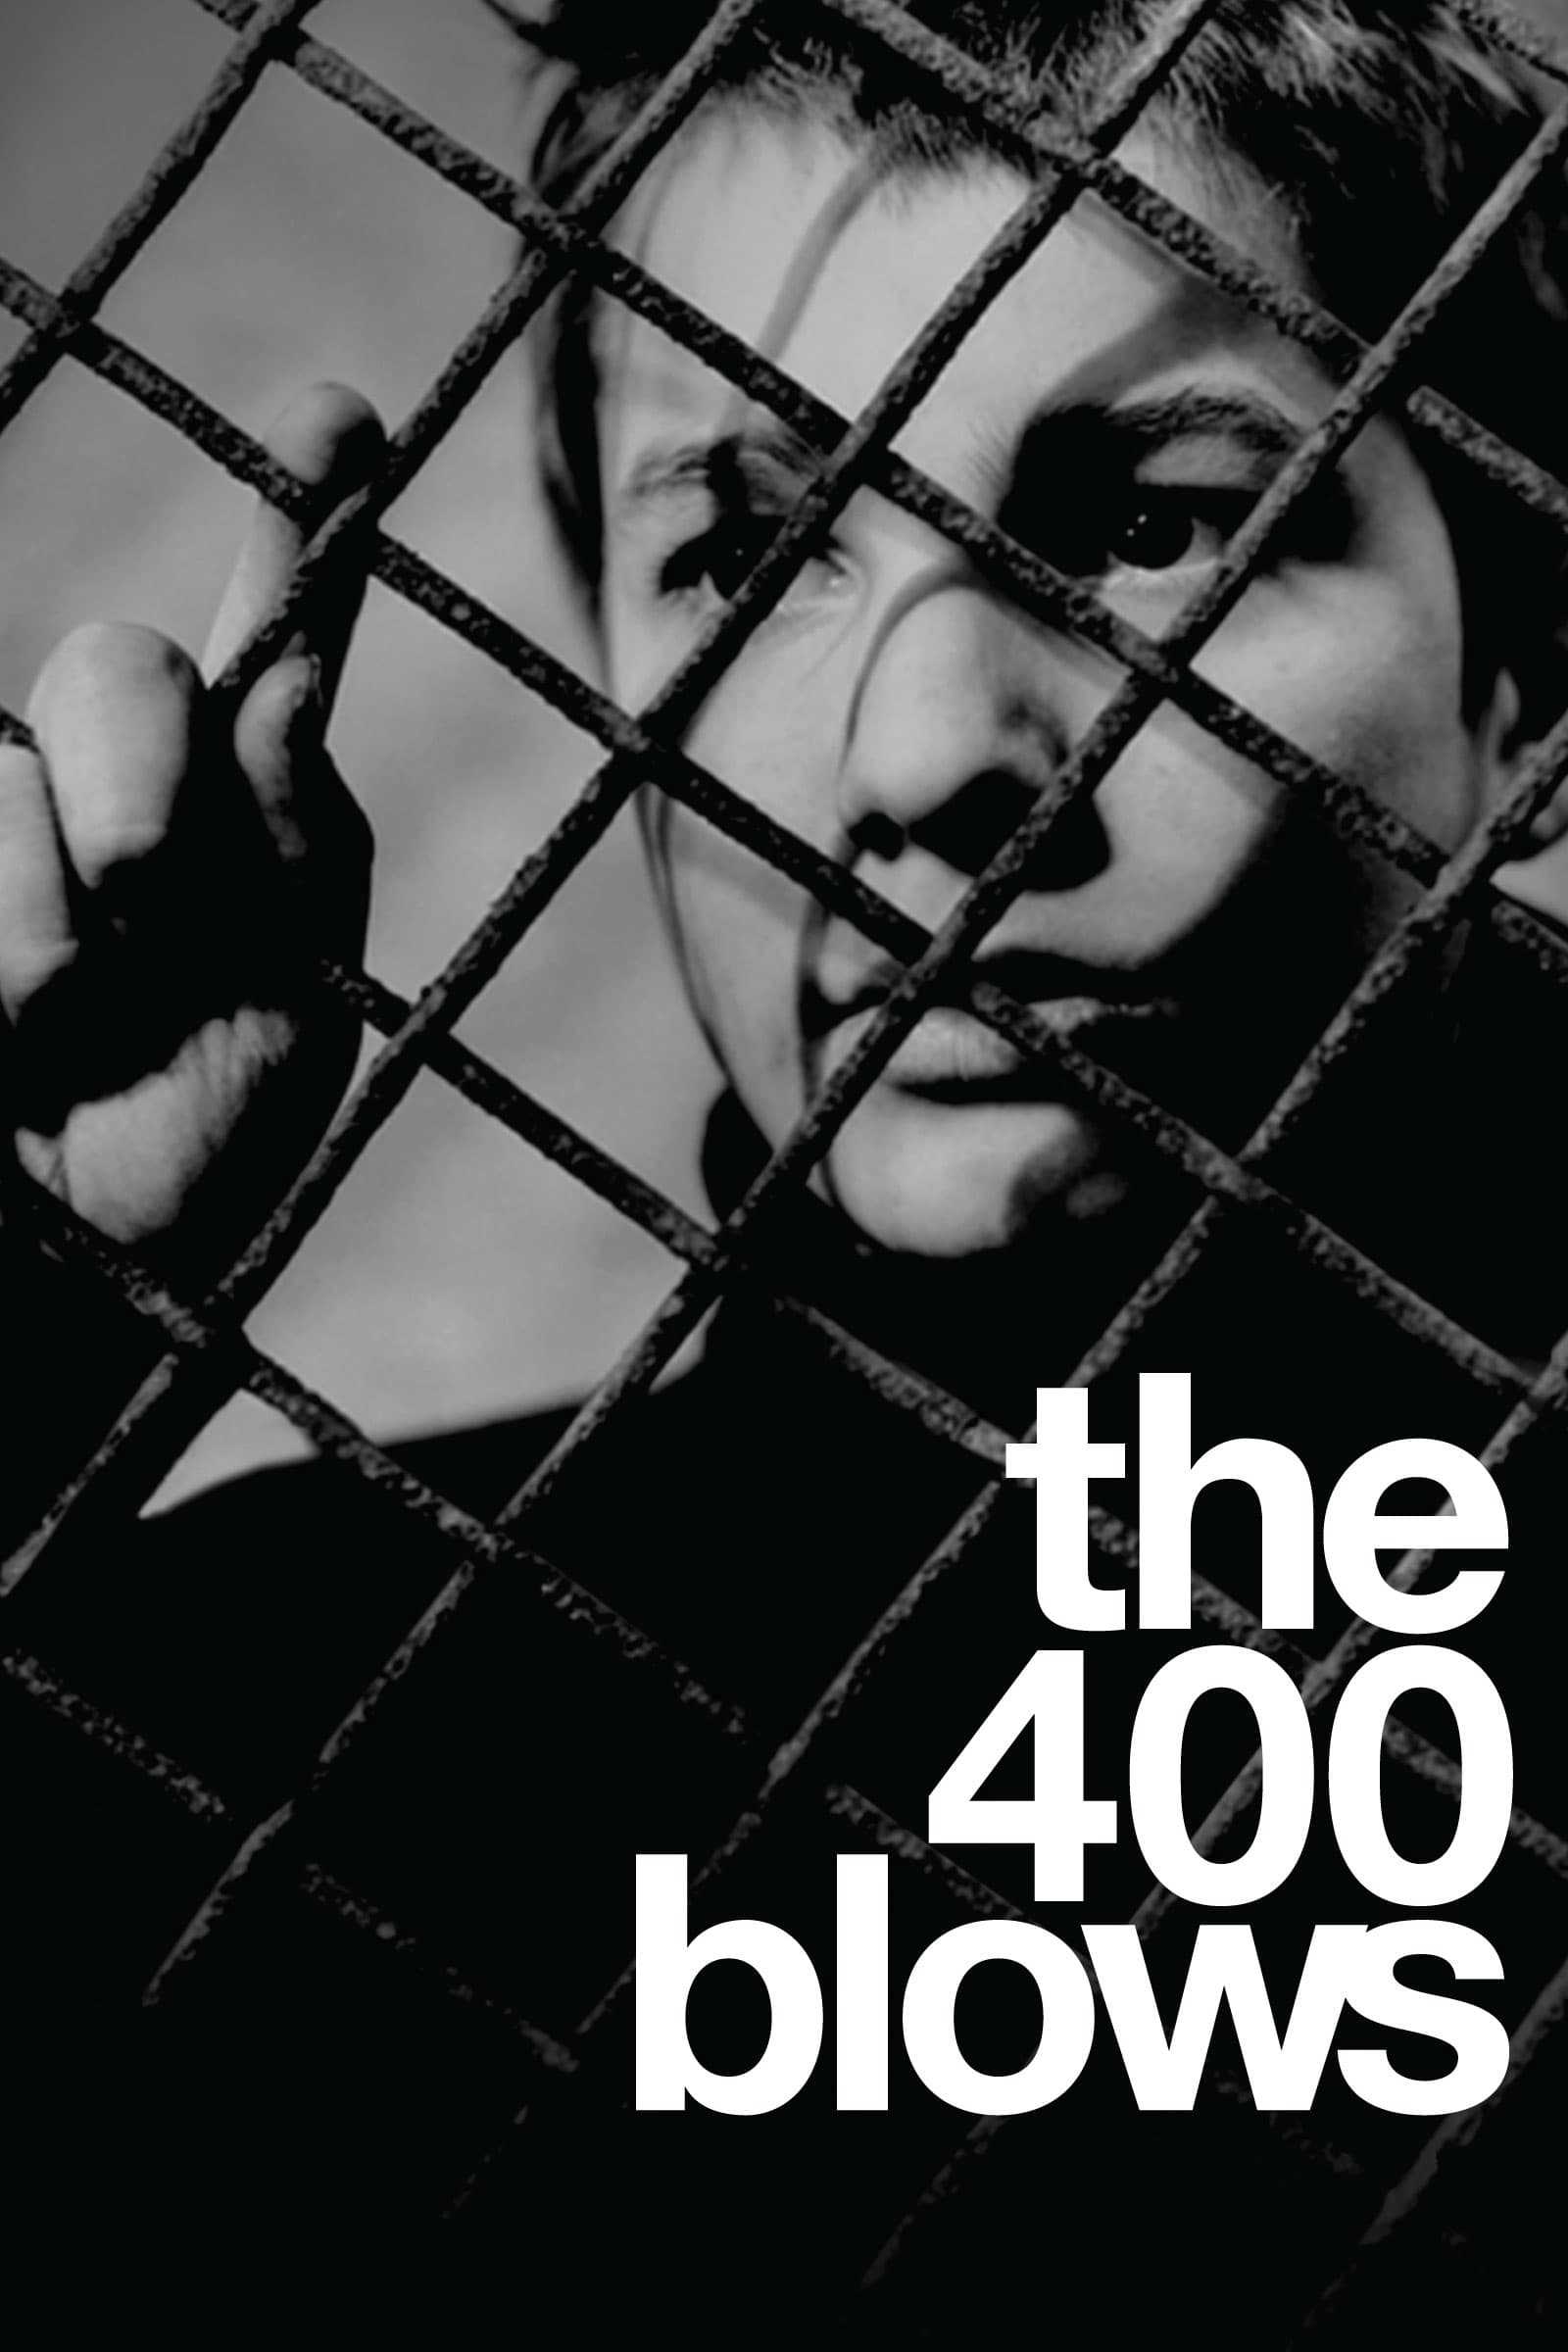 400 Cú Đấm - The 400 Blows